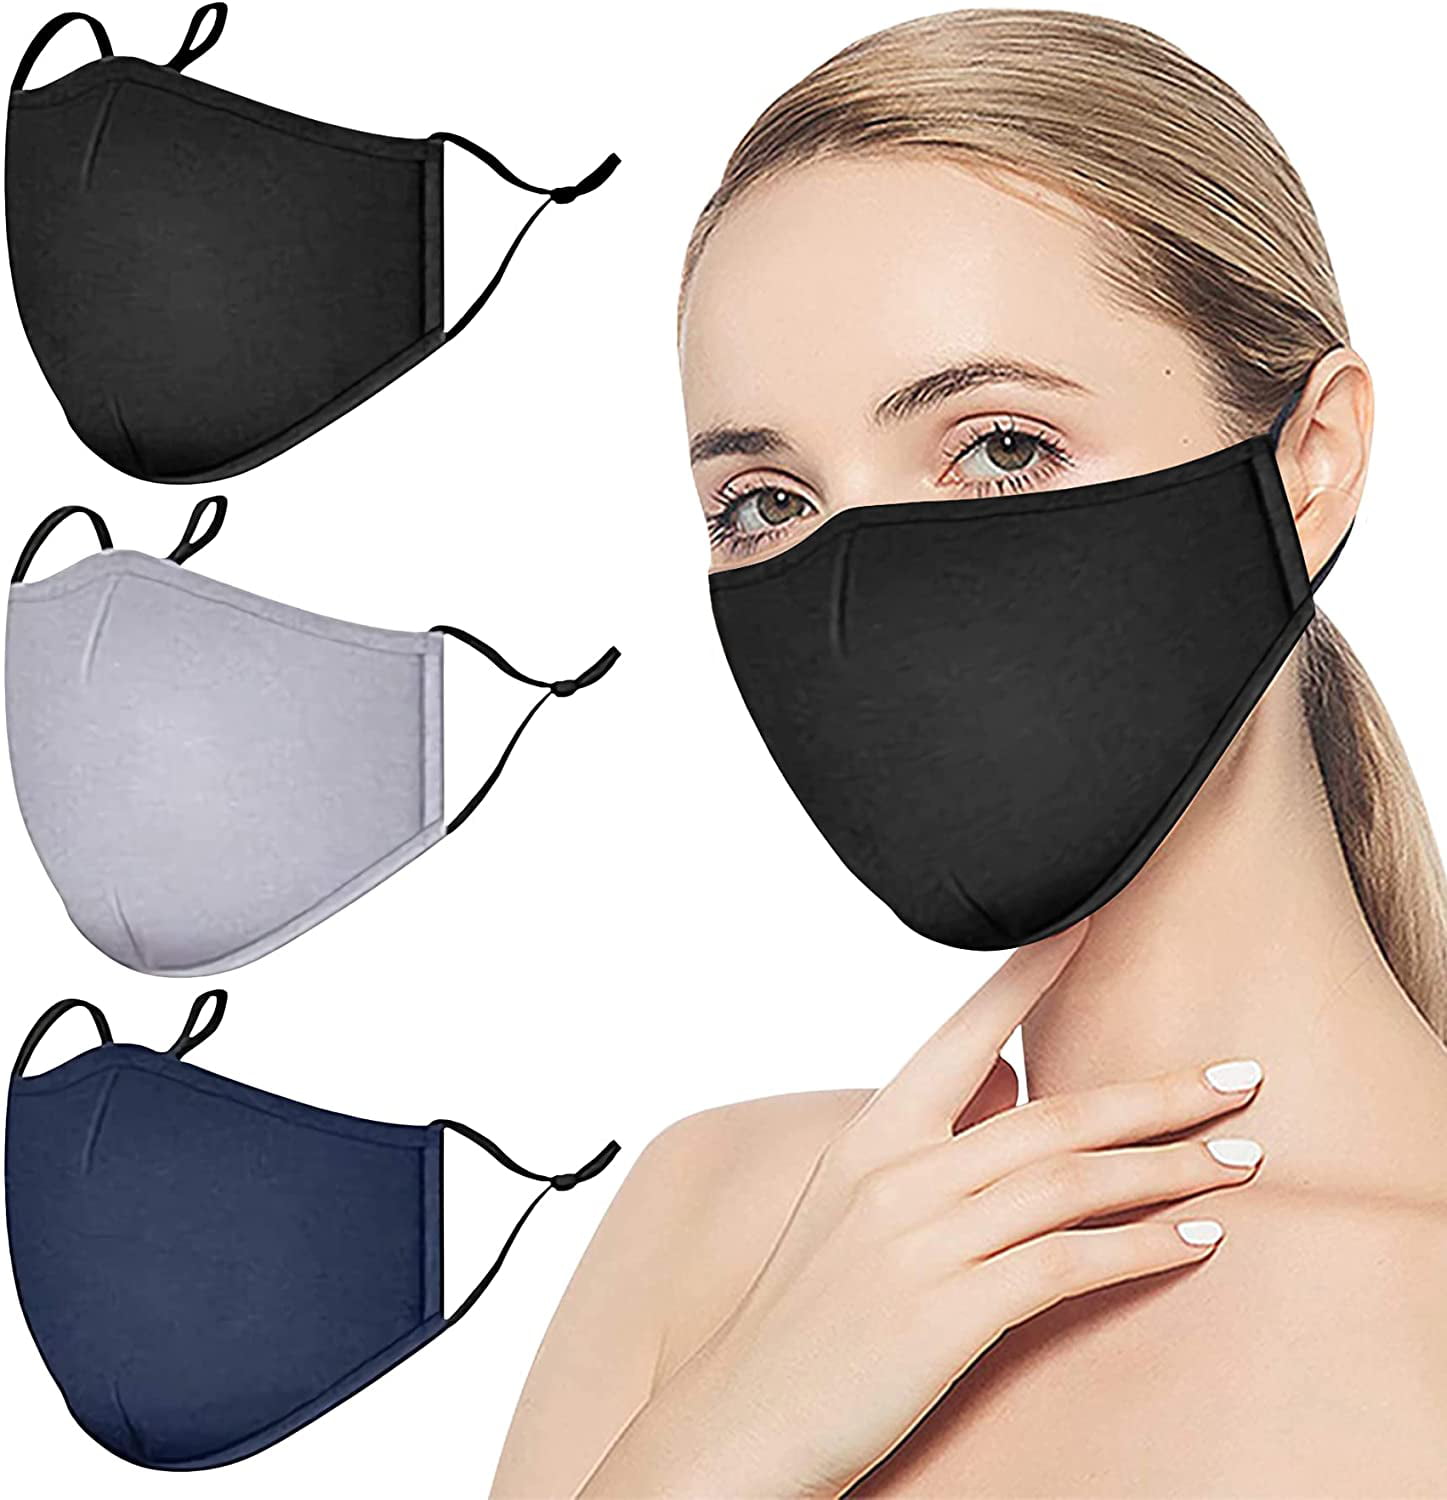 Unisex Face Cotton Washable Breathable Cover Women Men Reusable Bandanas Replaceable Balaclava Outdoor